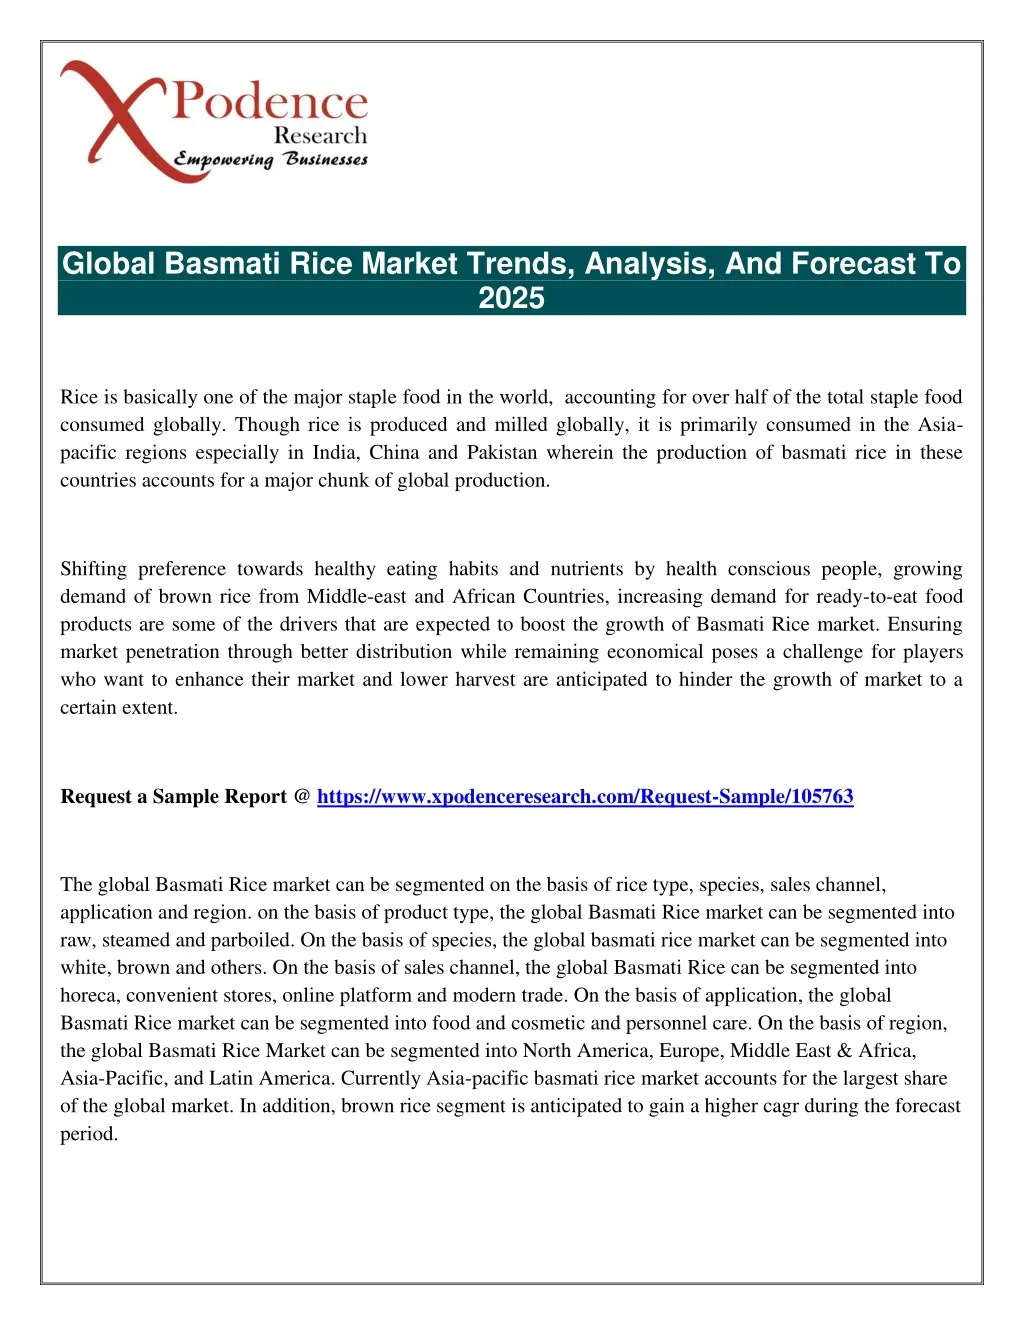 global basmati rice market trends analysis